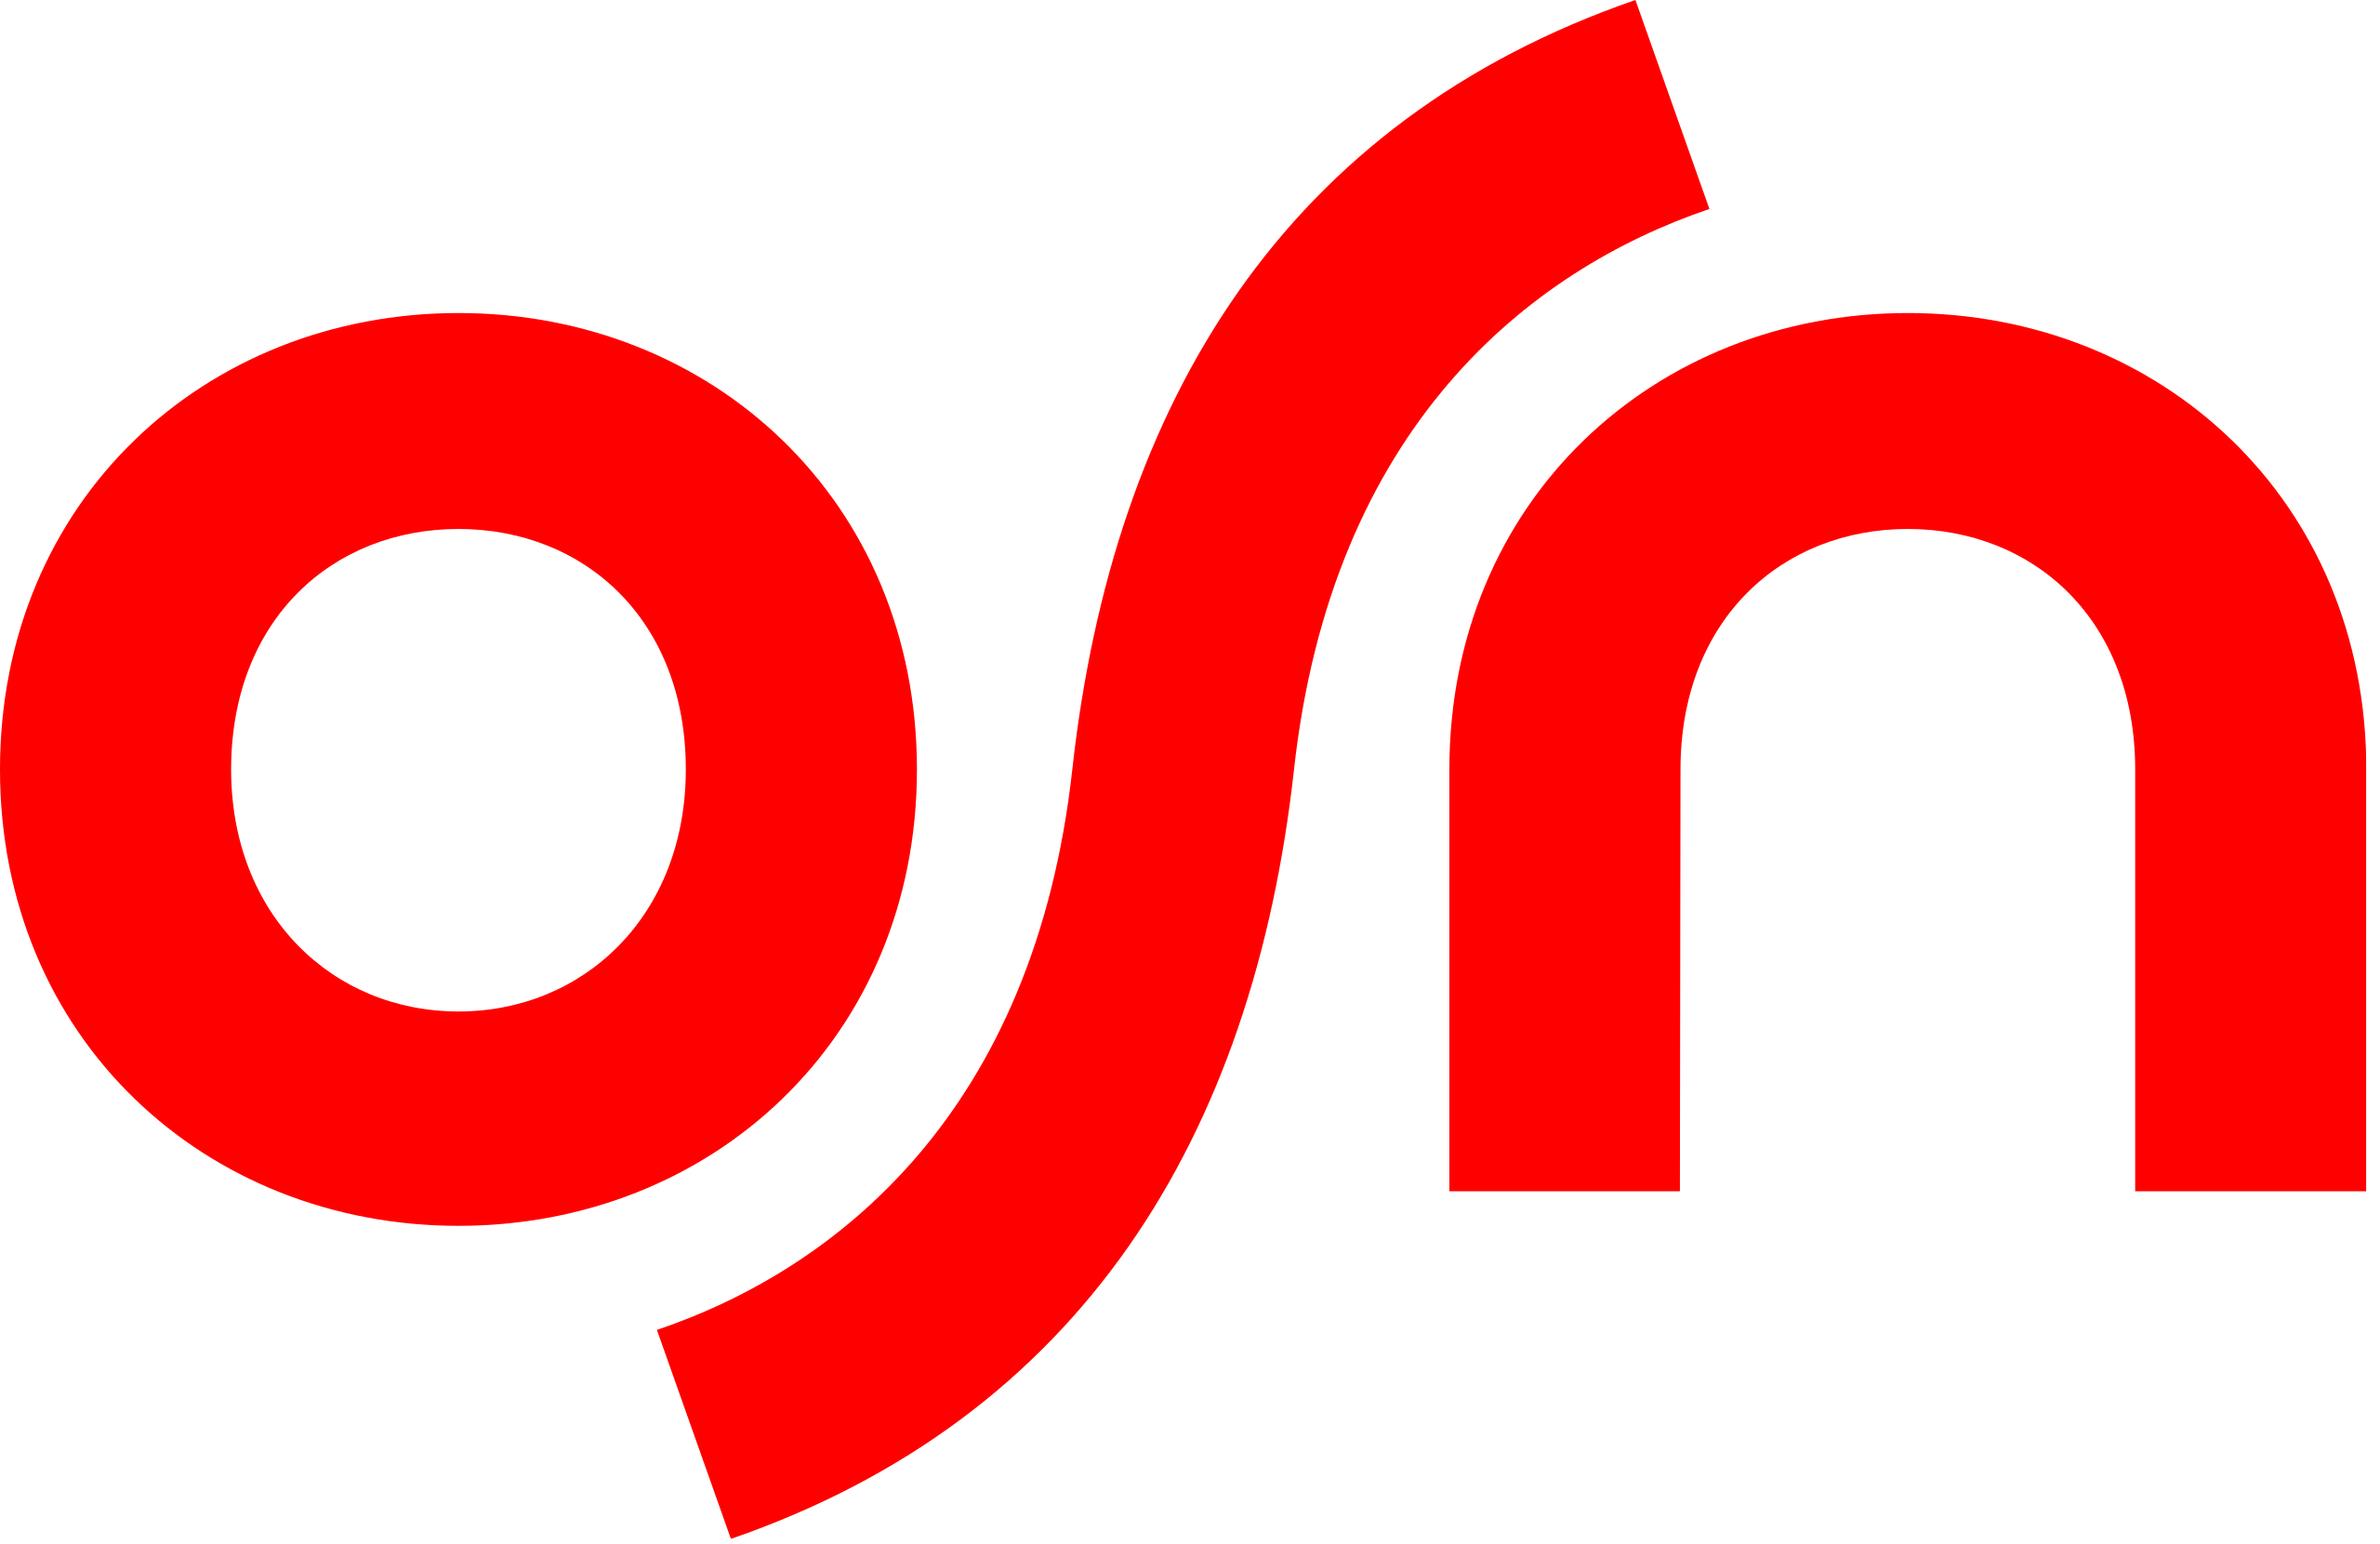 OSN Logo